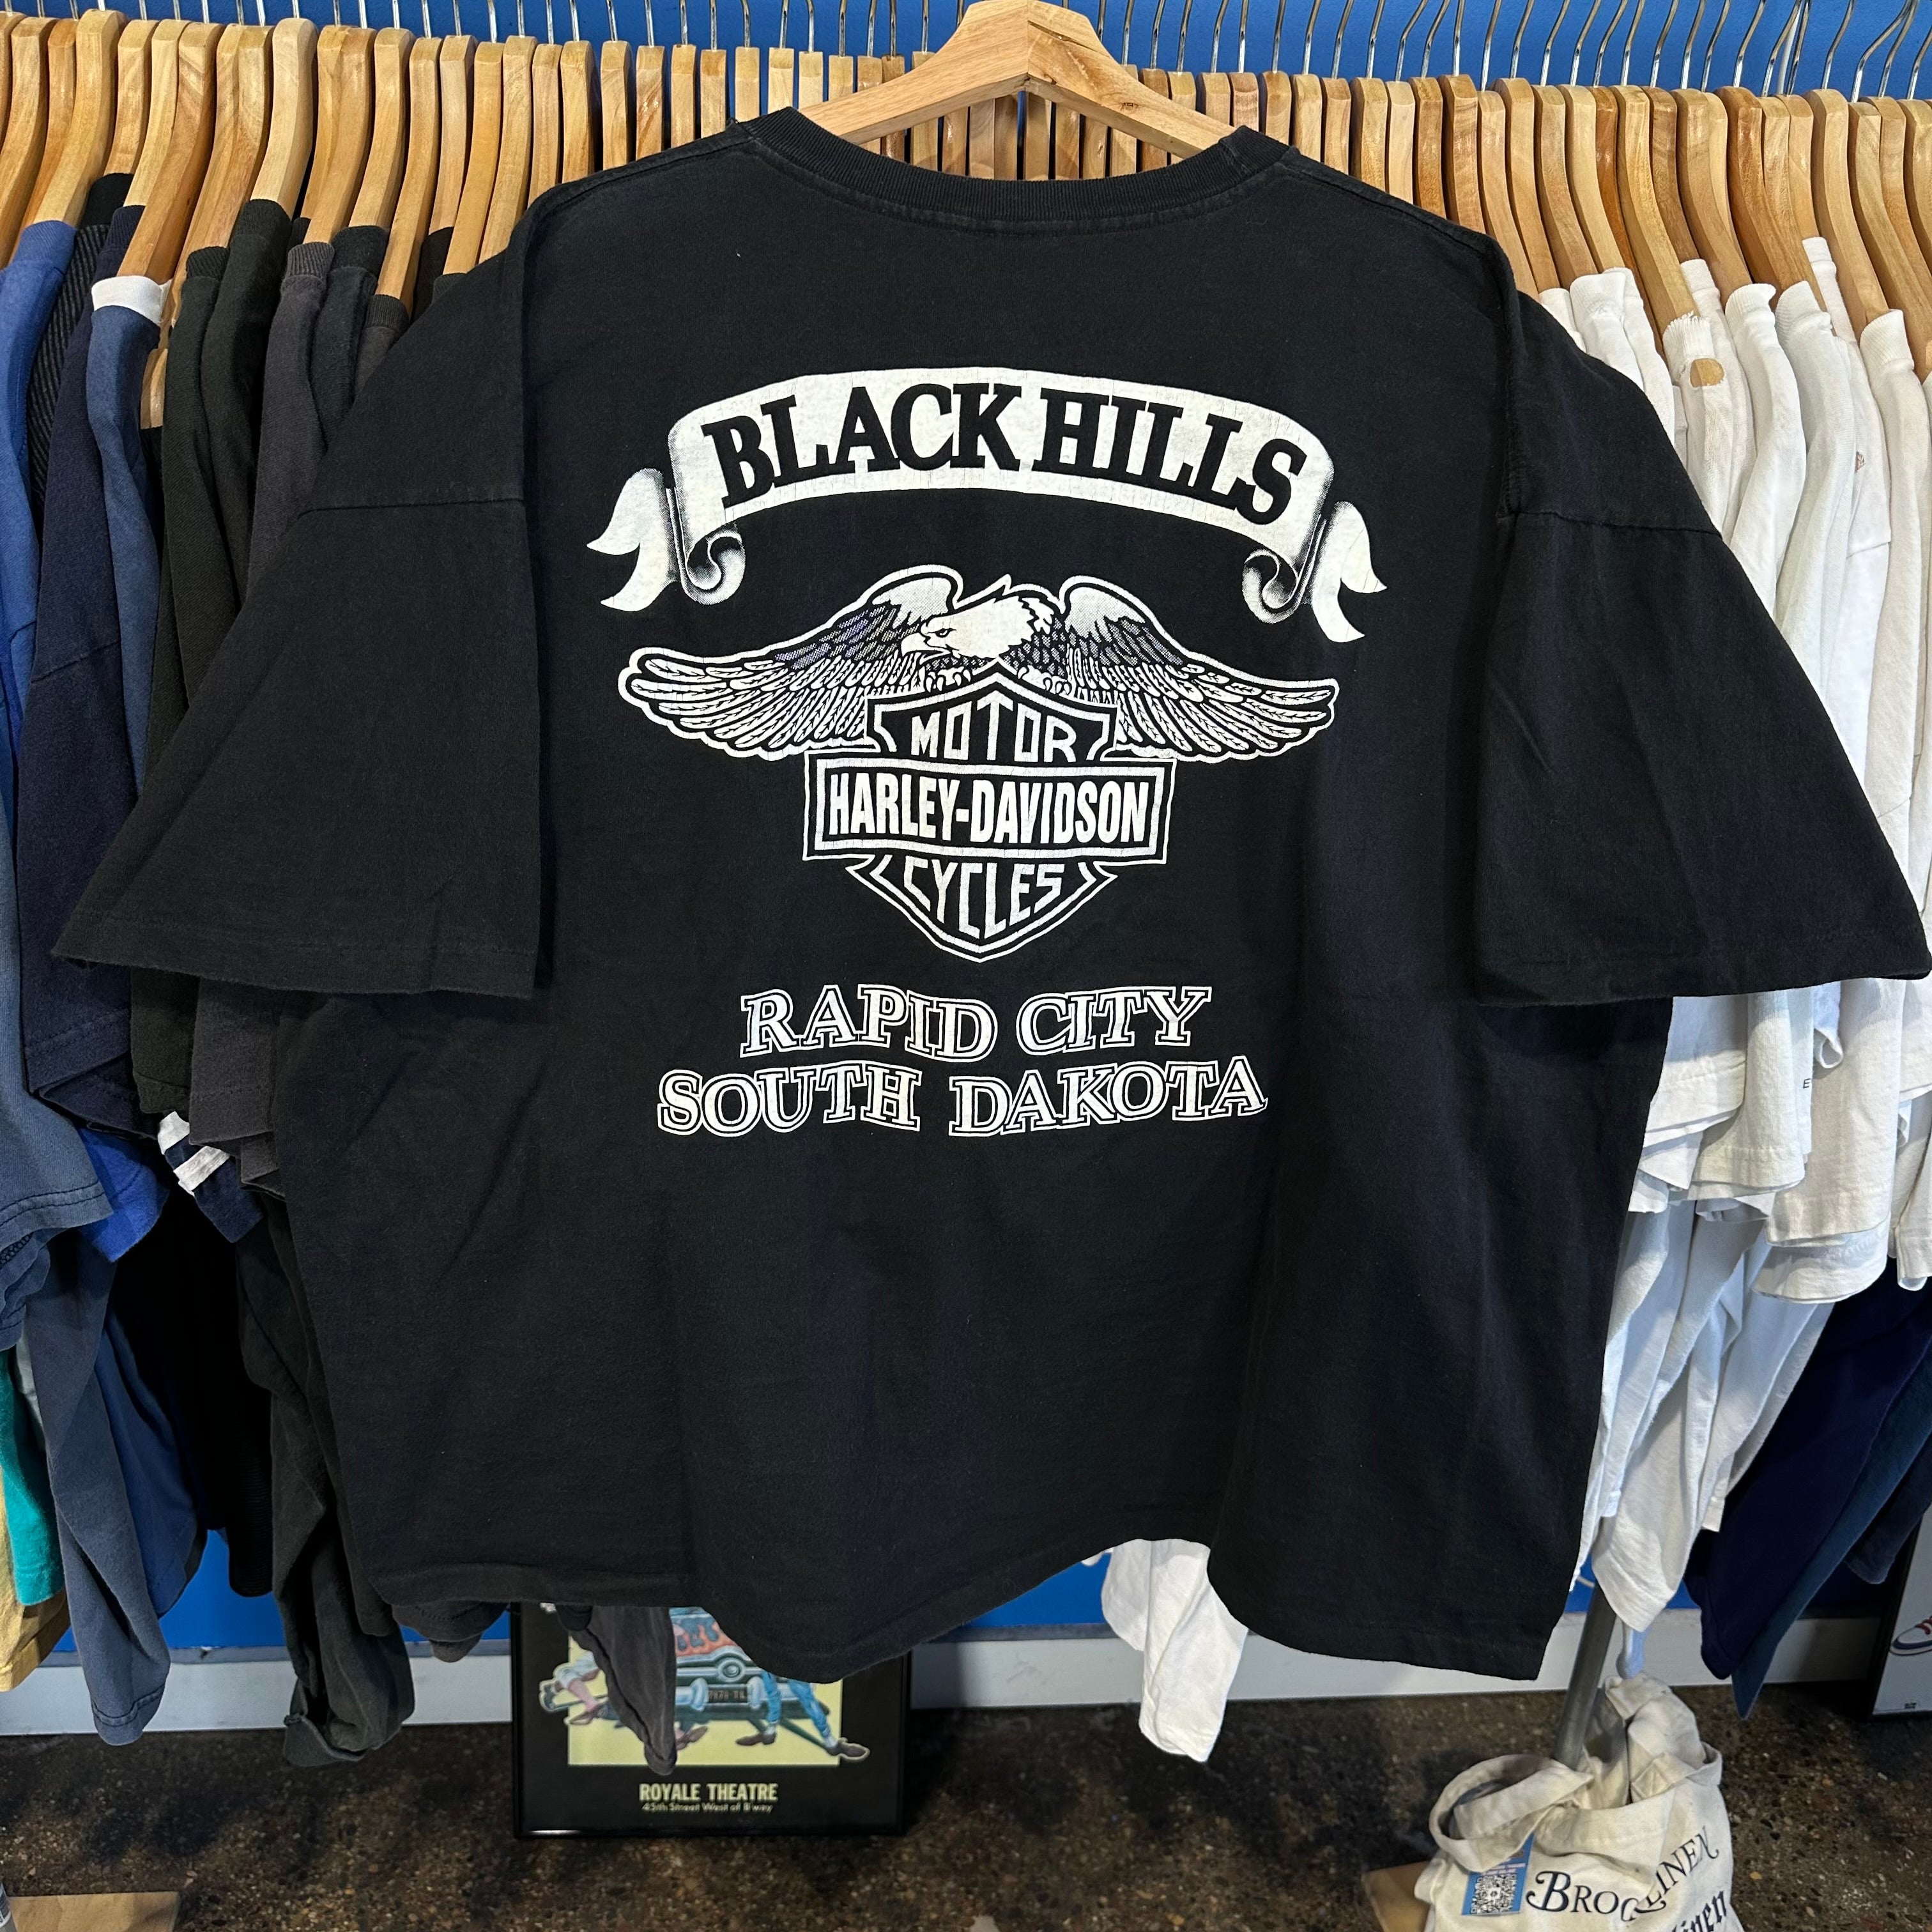 Harley Davidson Howling at the Moon Black Hills, Rapid City, SD T-Shirt